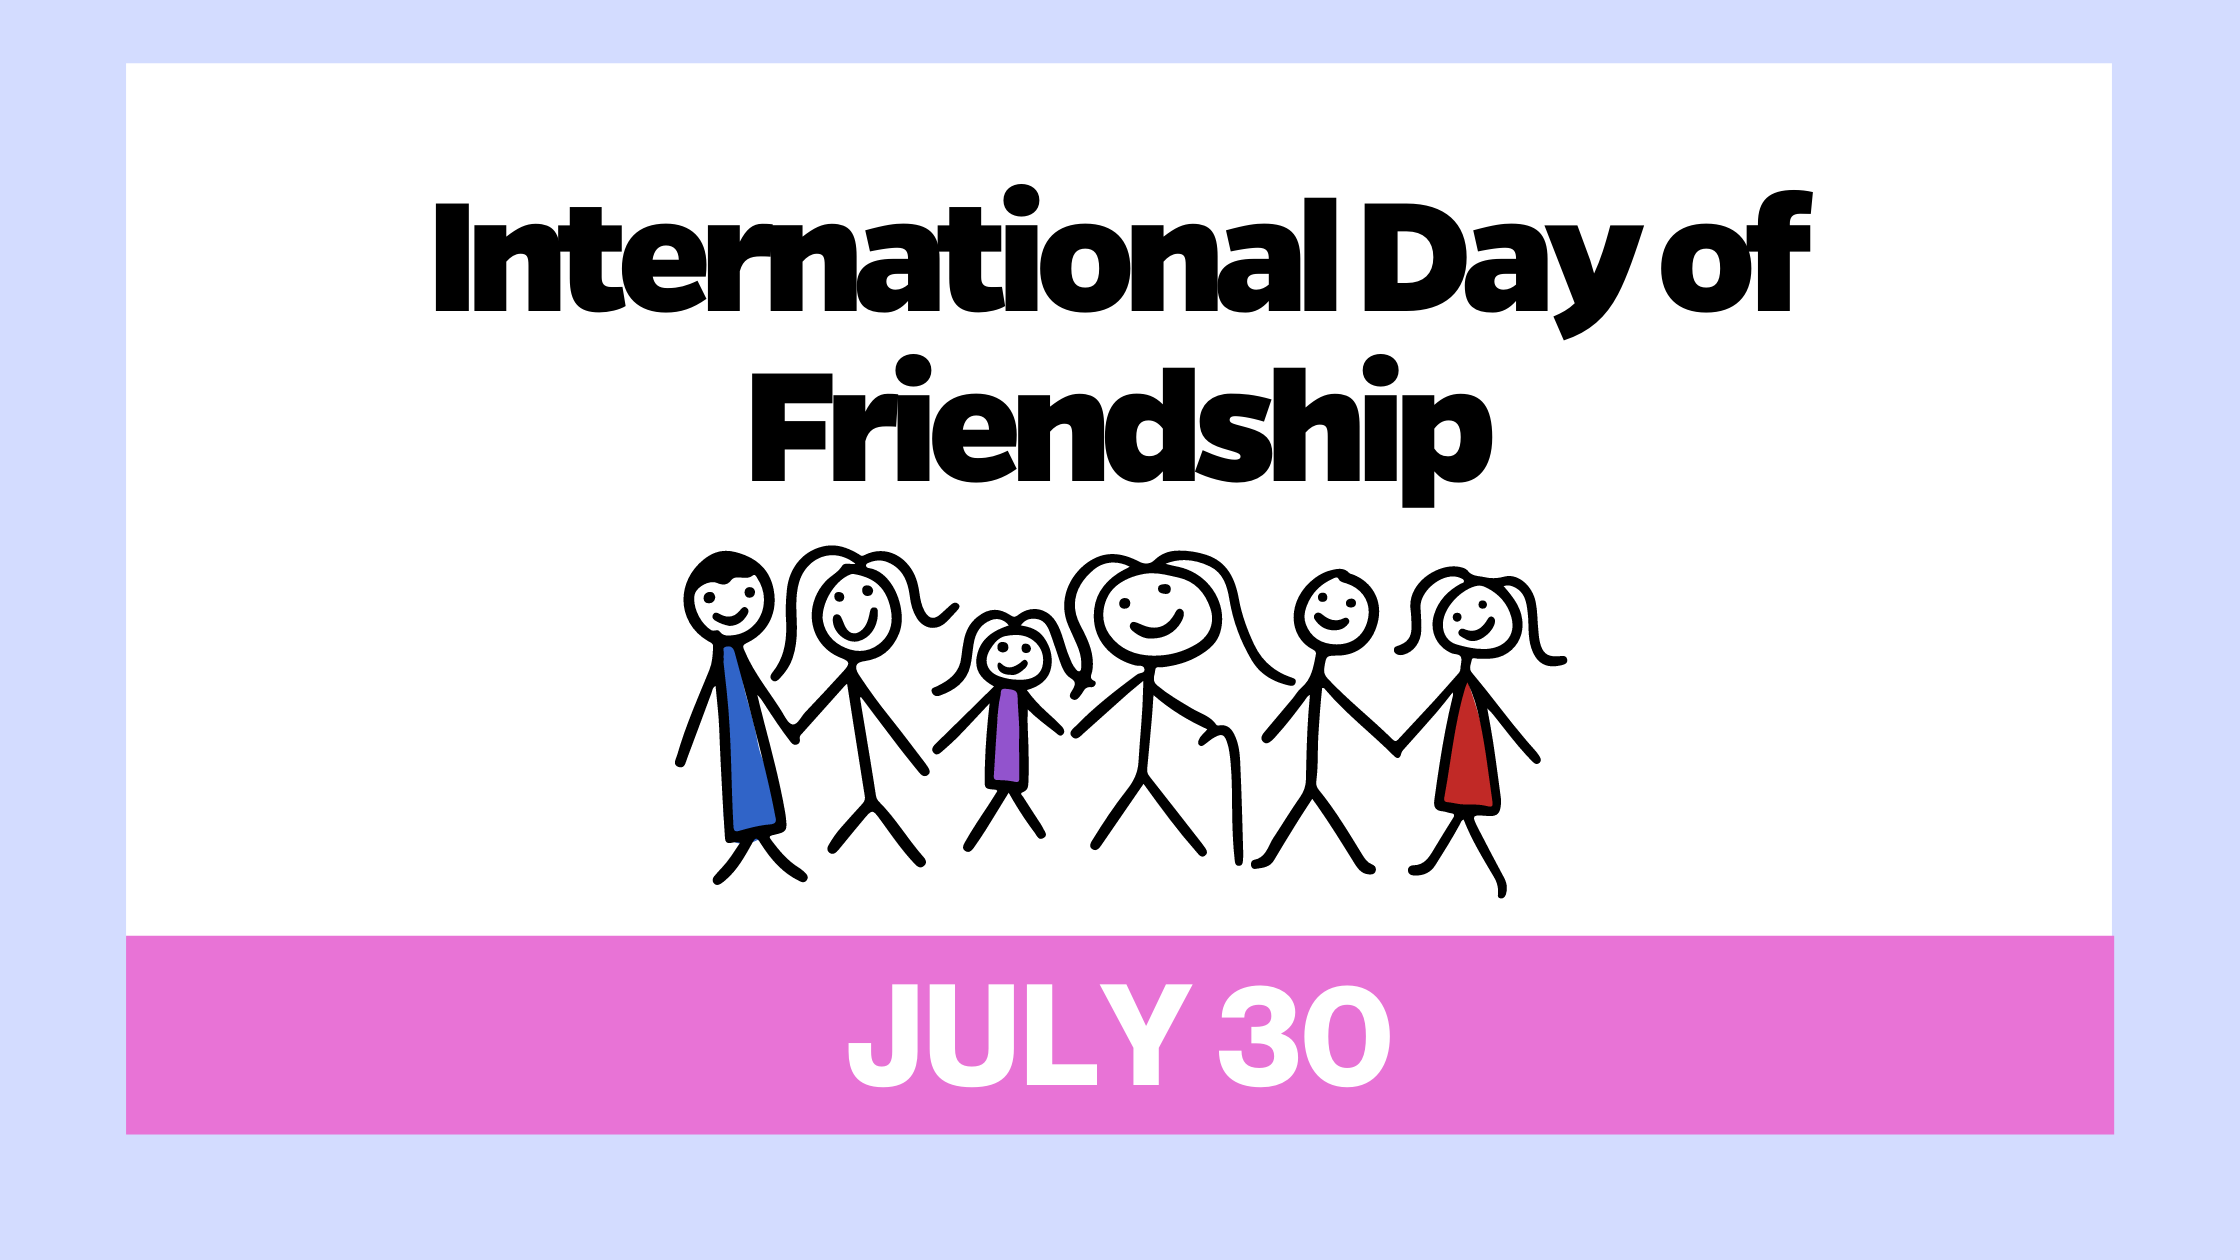 INTERNATIONAL DAY OF FRIENDSHIP